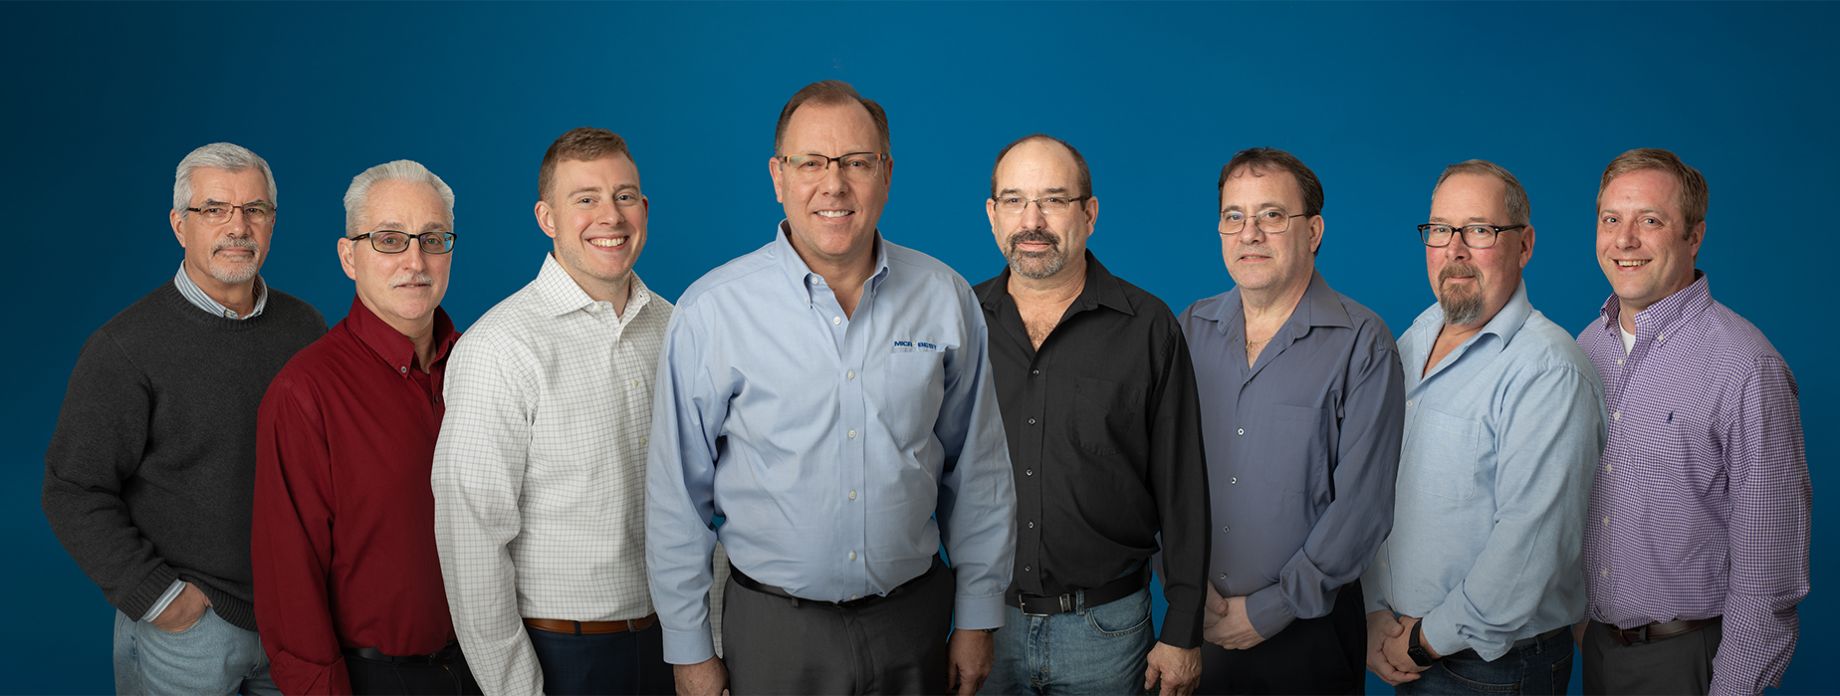 Eight members of the Microbest Leadership team smiling.